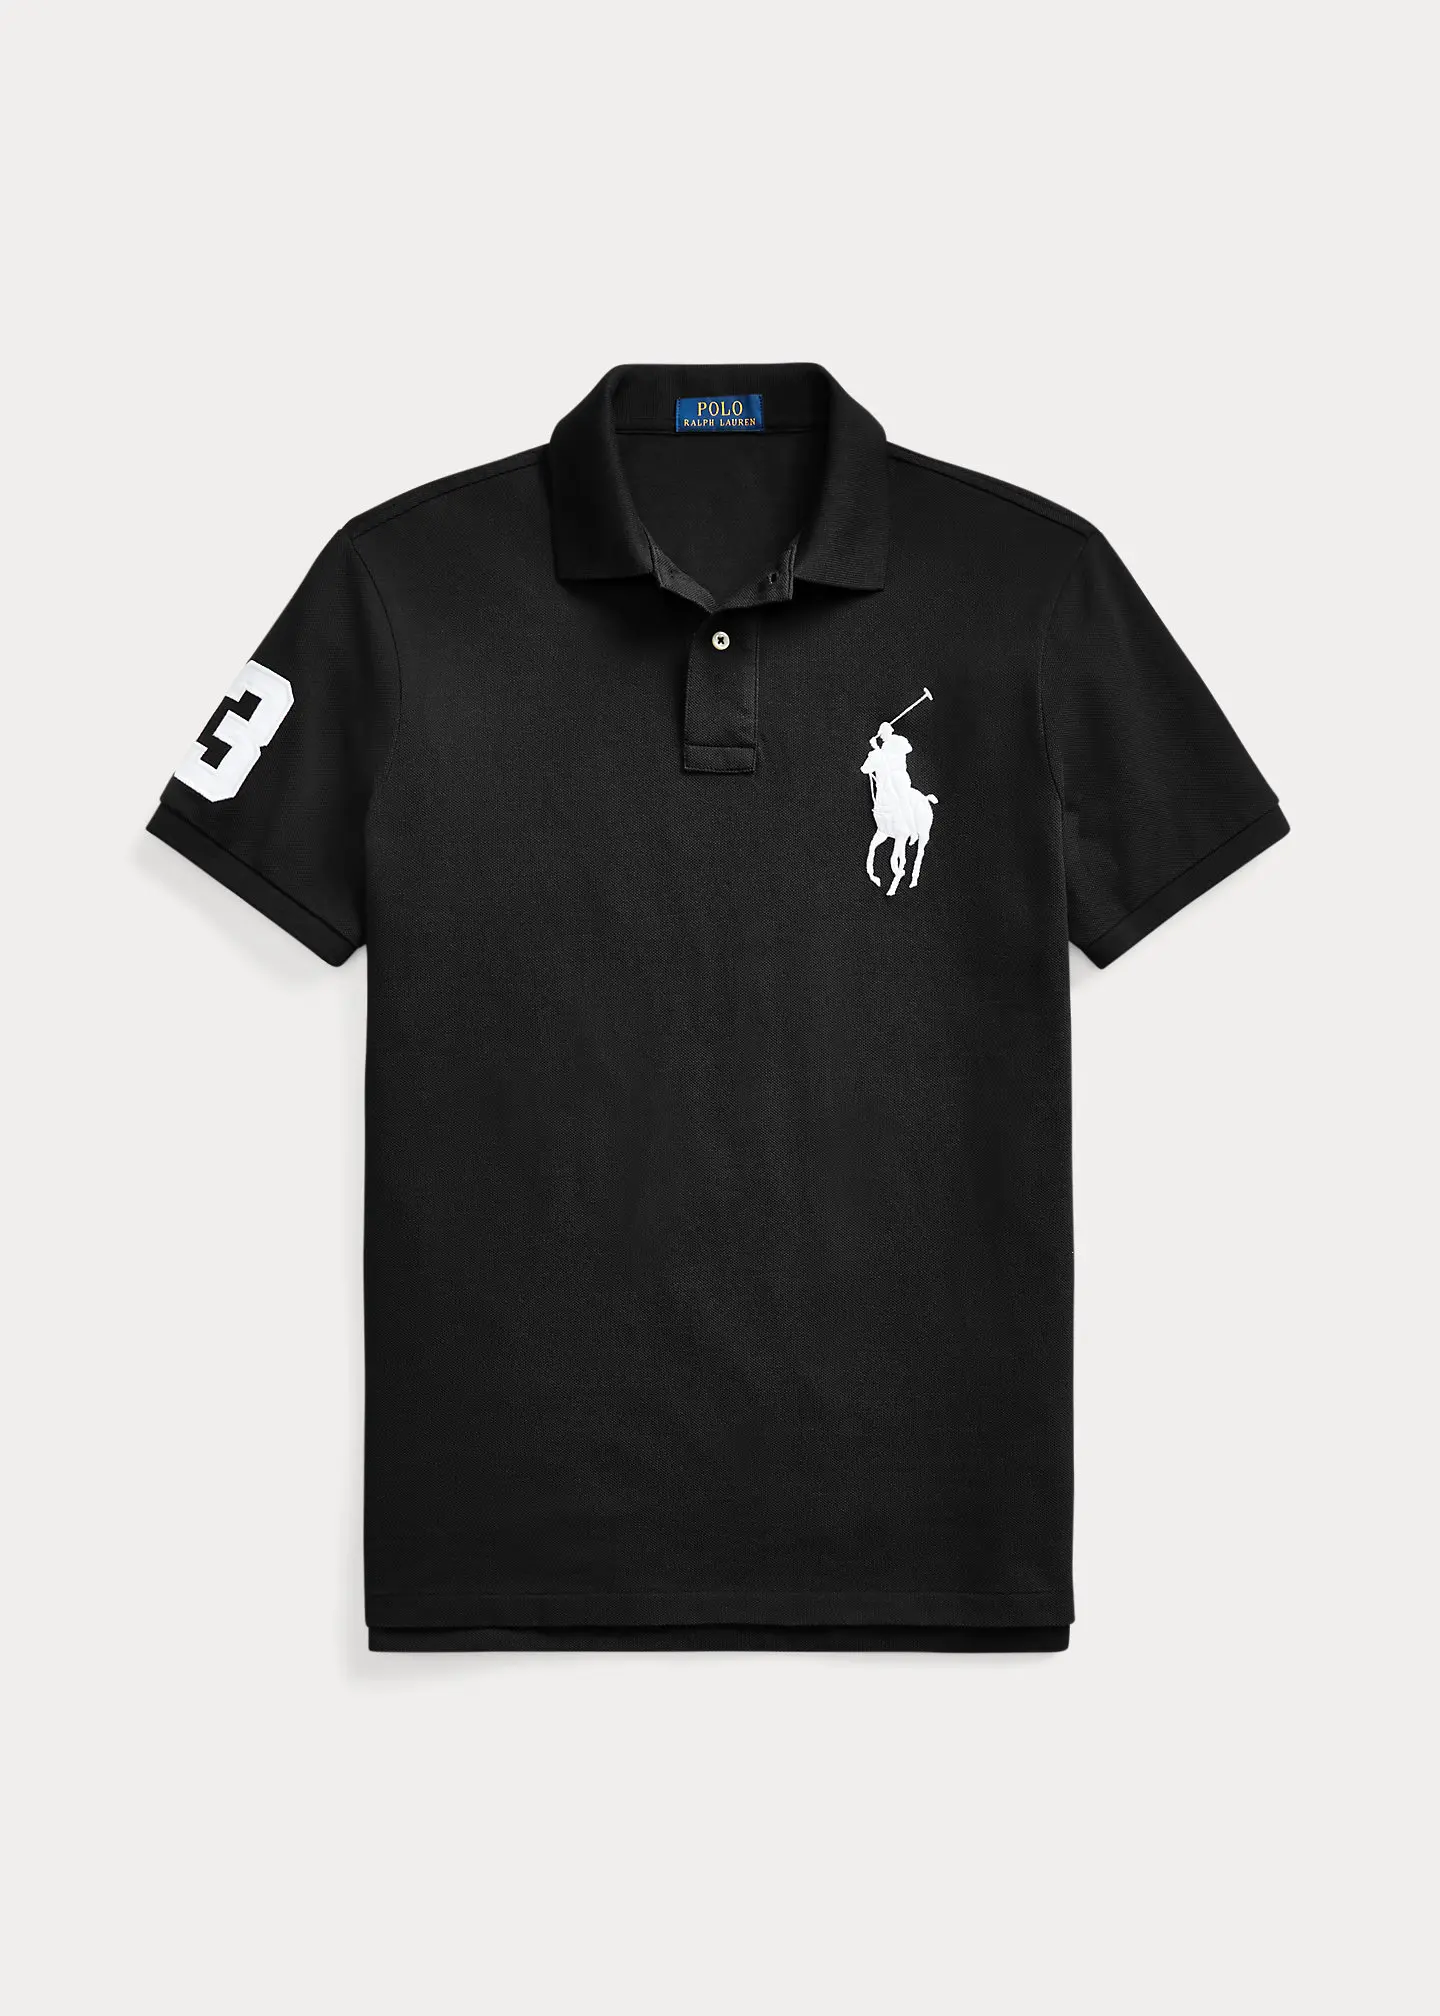 Nutsima Mens Polo Casual Polos Fashion Polo Shirt Hip Hop Tops & Tees Shirt